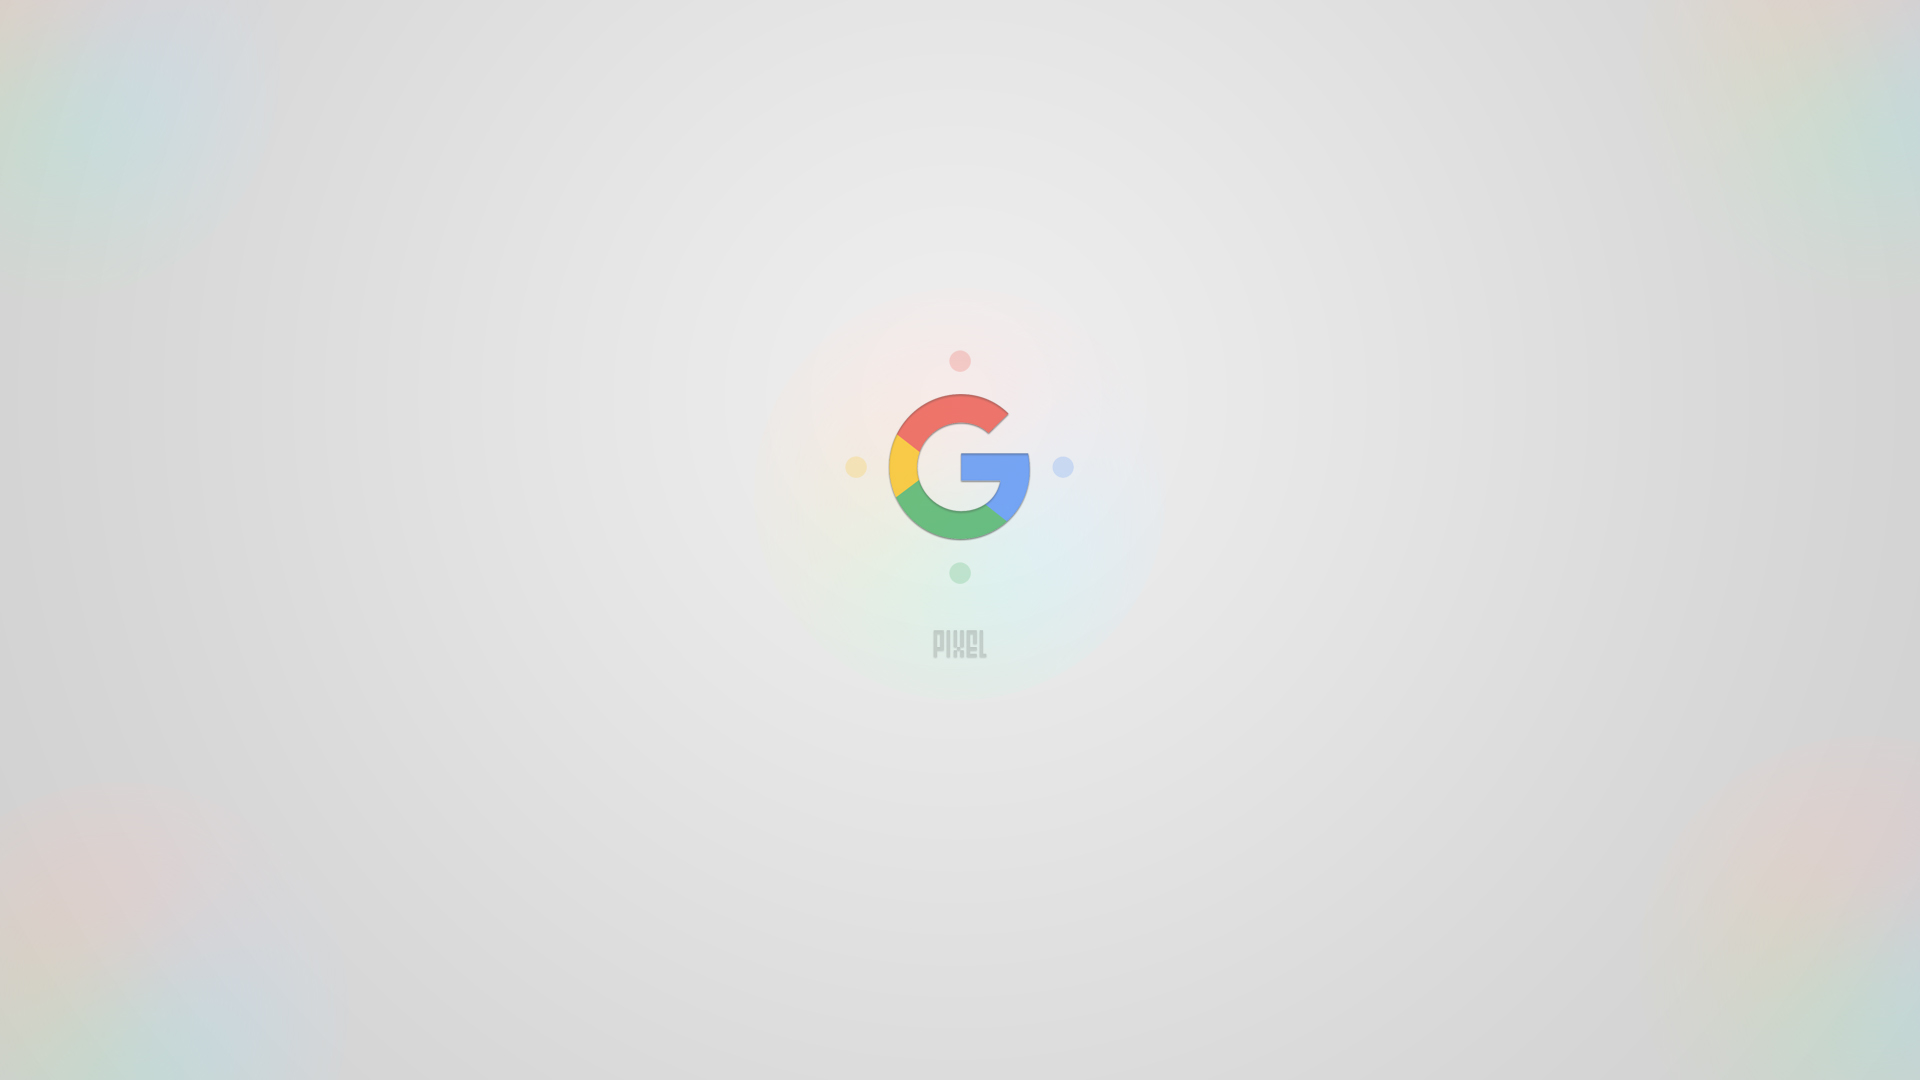 General 1920x1080 material style minimalism logo Google